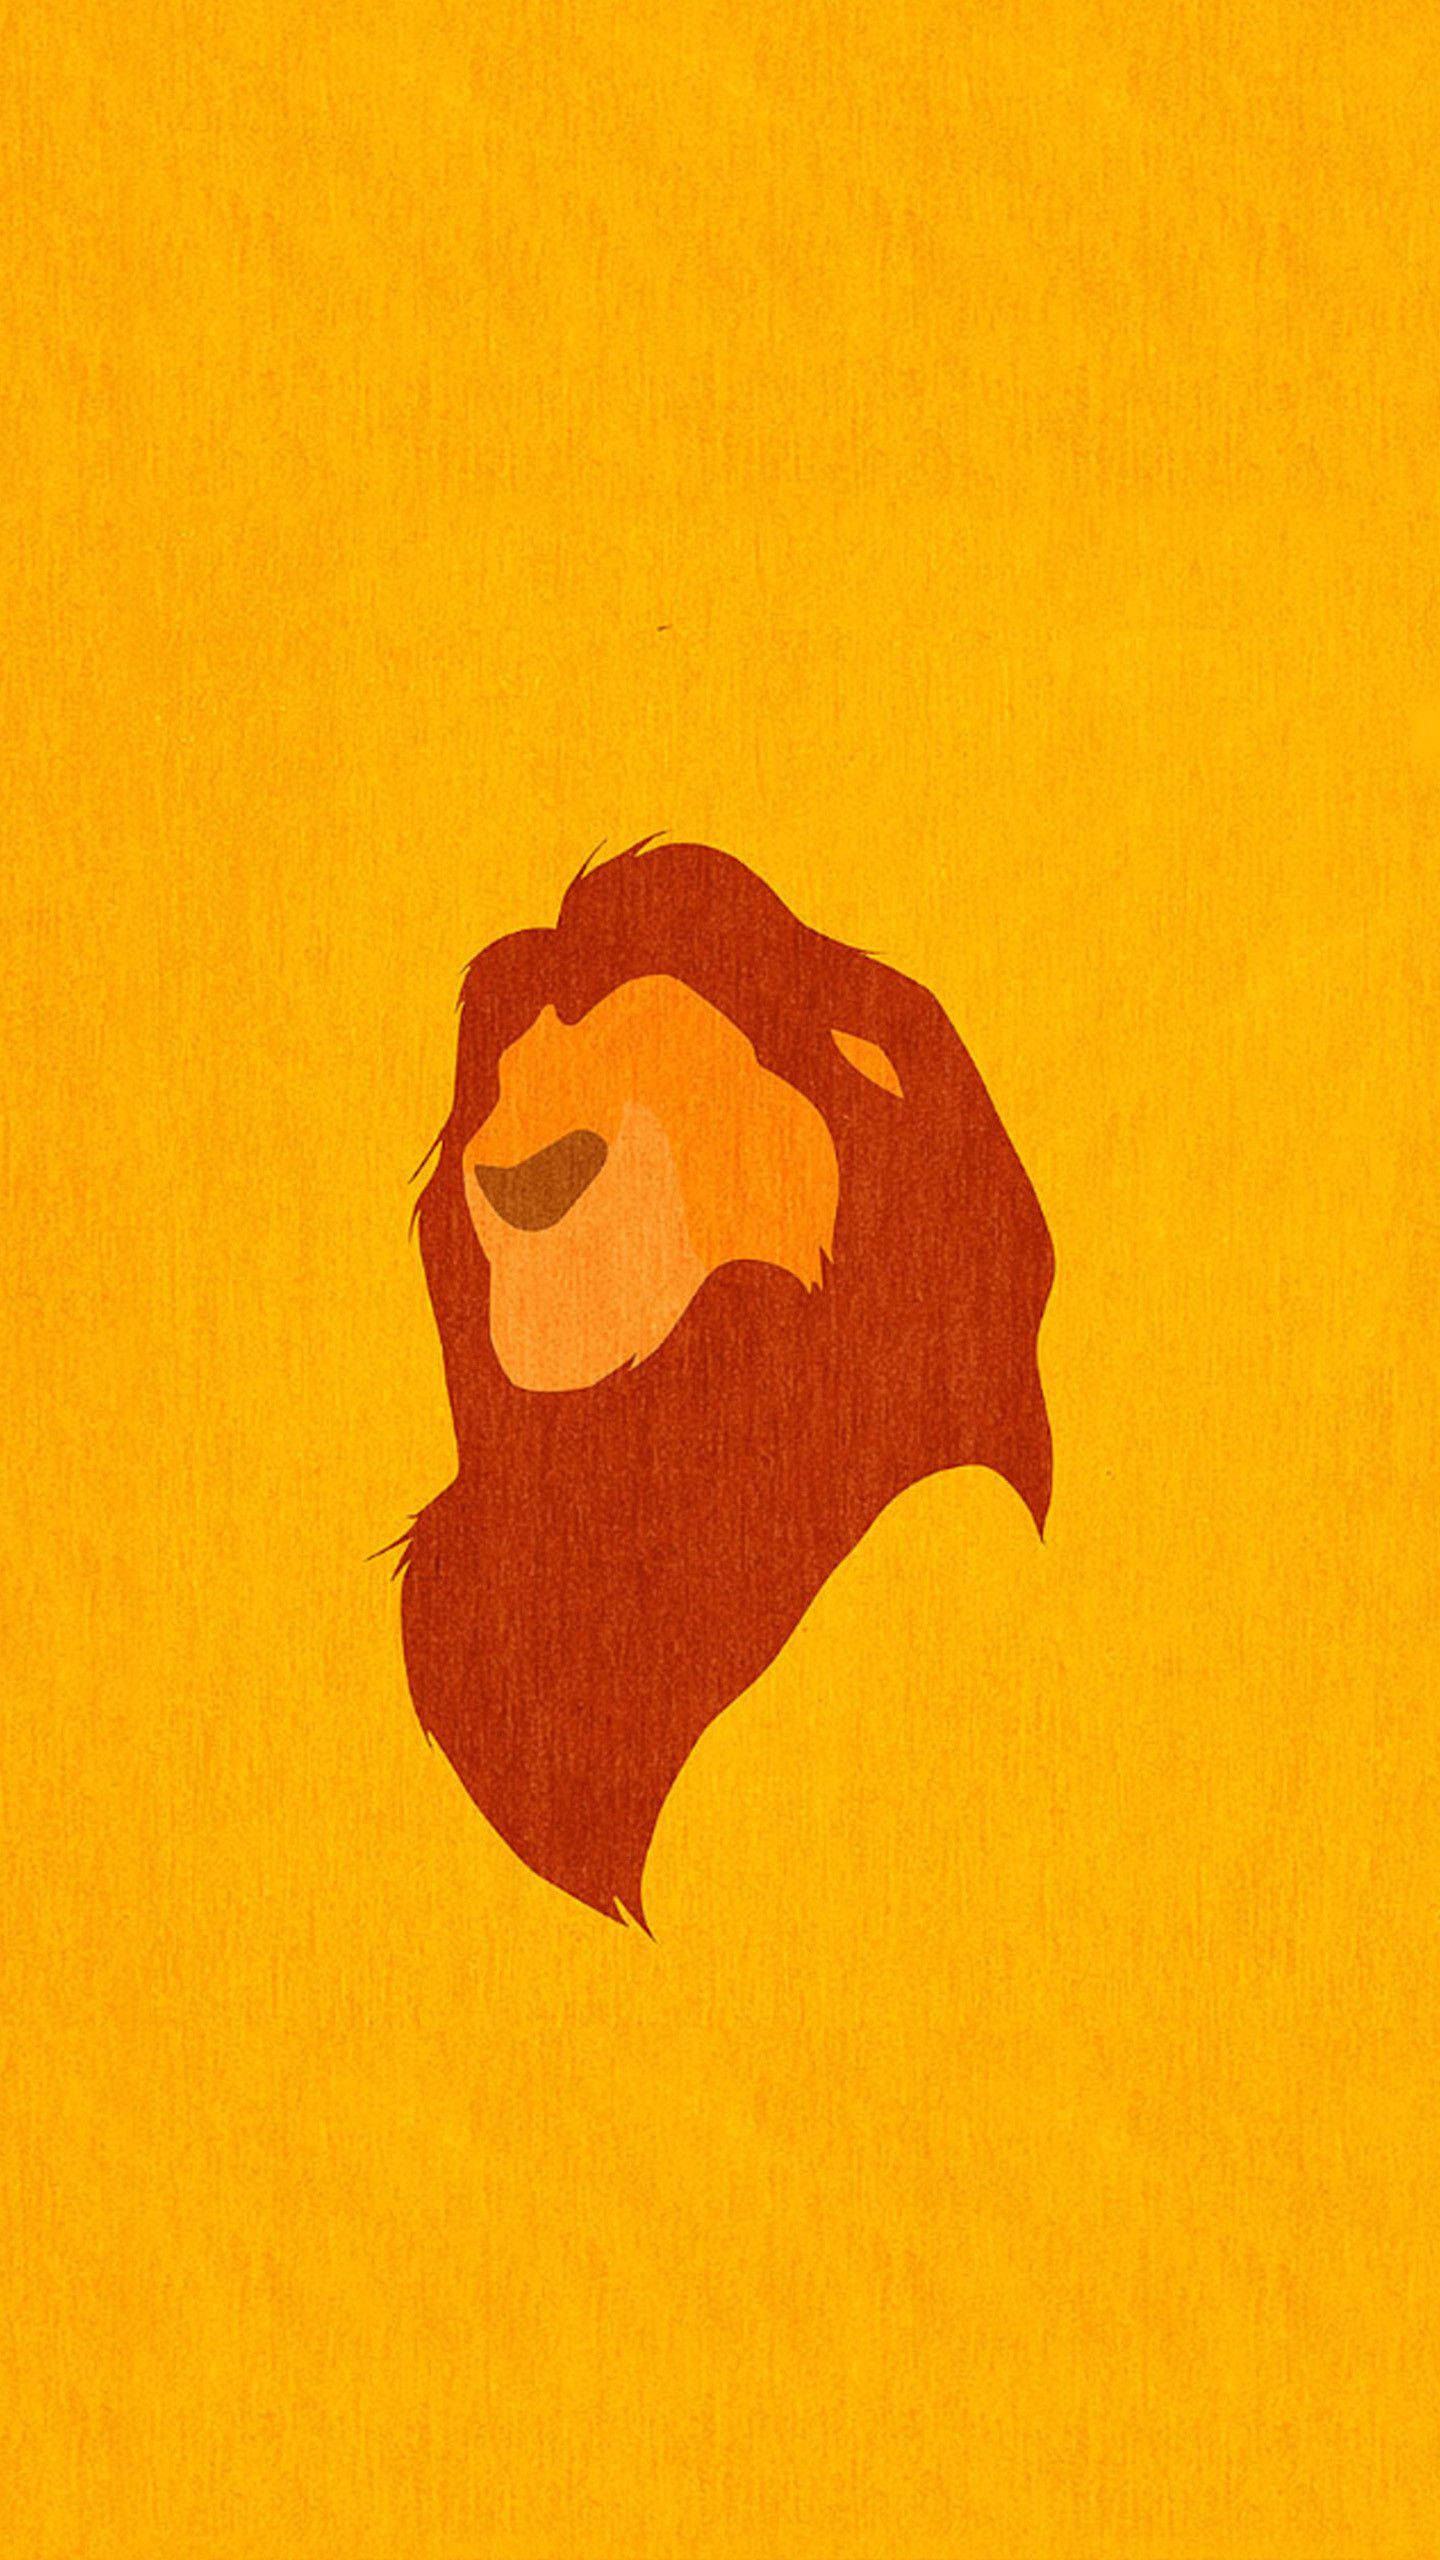 The Lion King Minimalist iPhone 6 Wallpaper 1080x1920 iPhone 6s Plus - The Lion King, lion